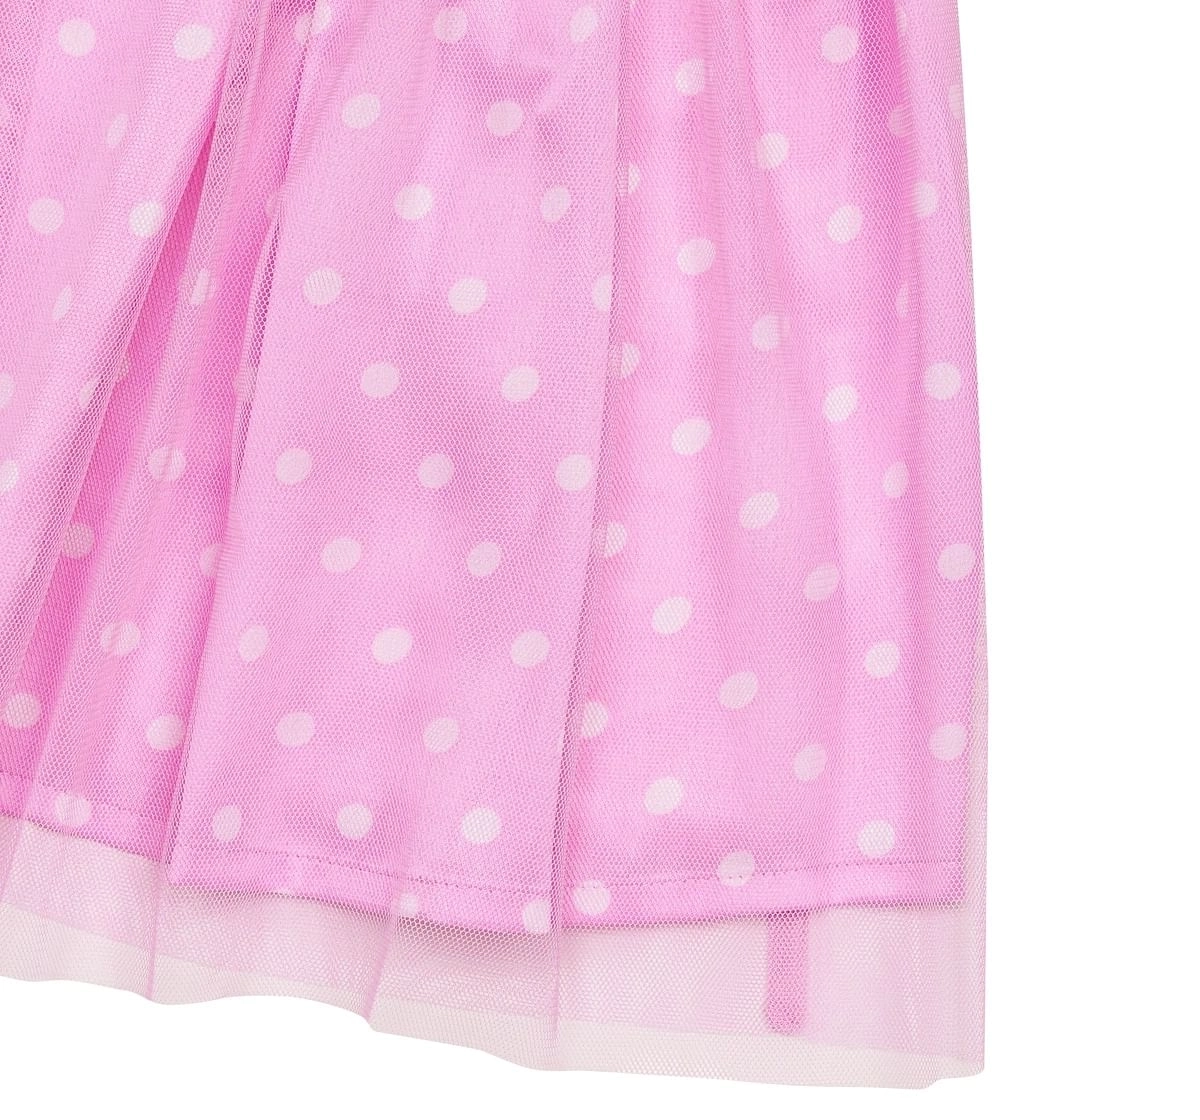 H by Hamleys Girls Short Sleeves Partywear Dress Spot Print with Belt-Pink